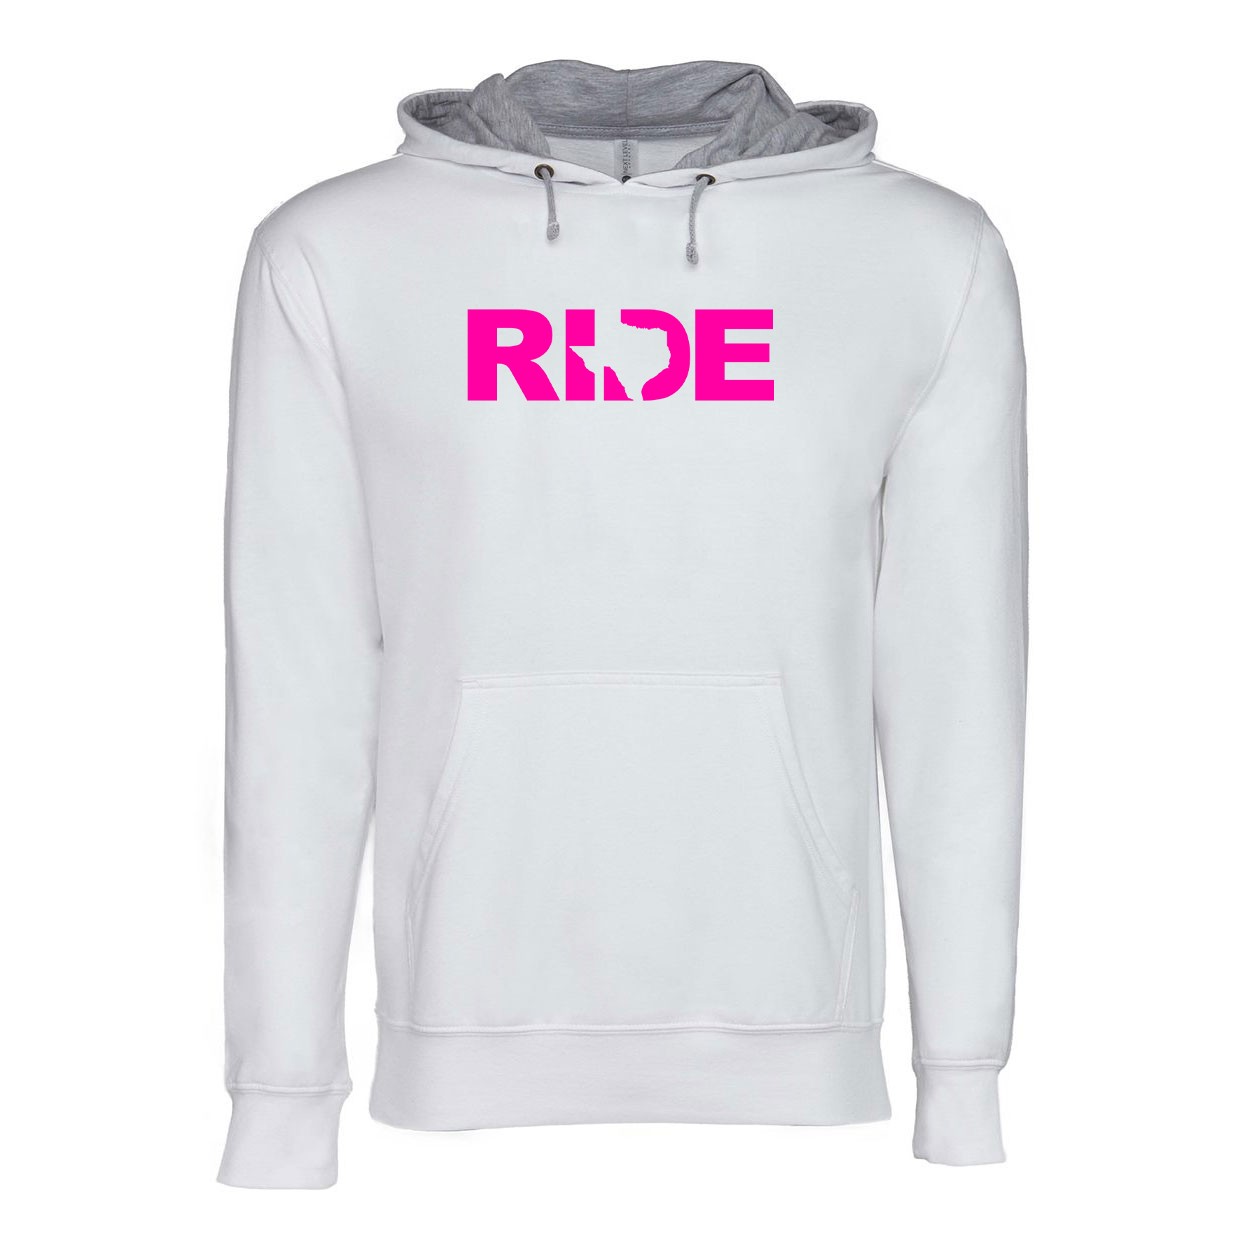 Ride Texas Classic Lightweight Sweatshirt White/Heather Gray (Pink Logo)